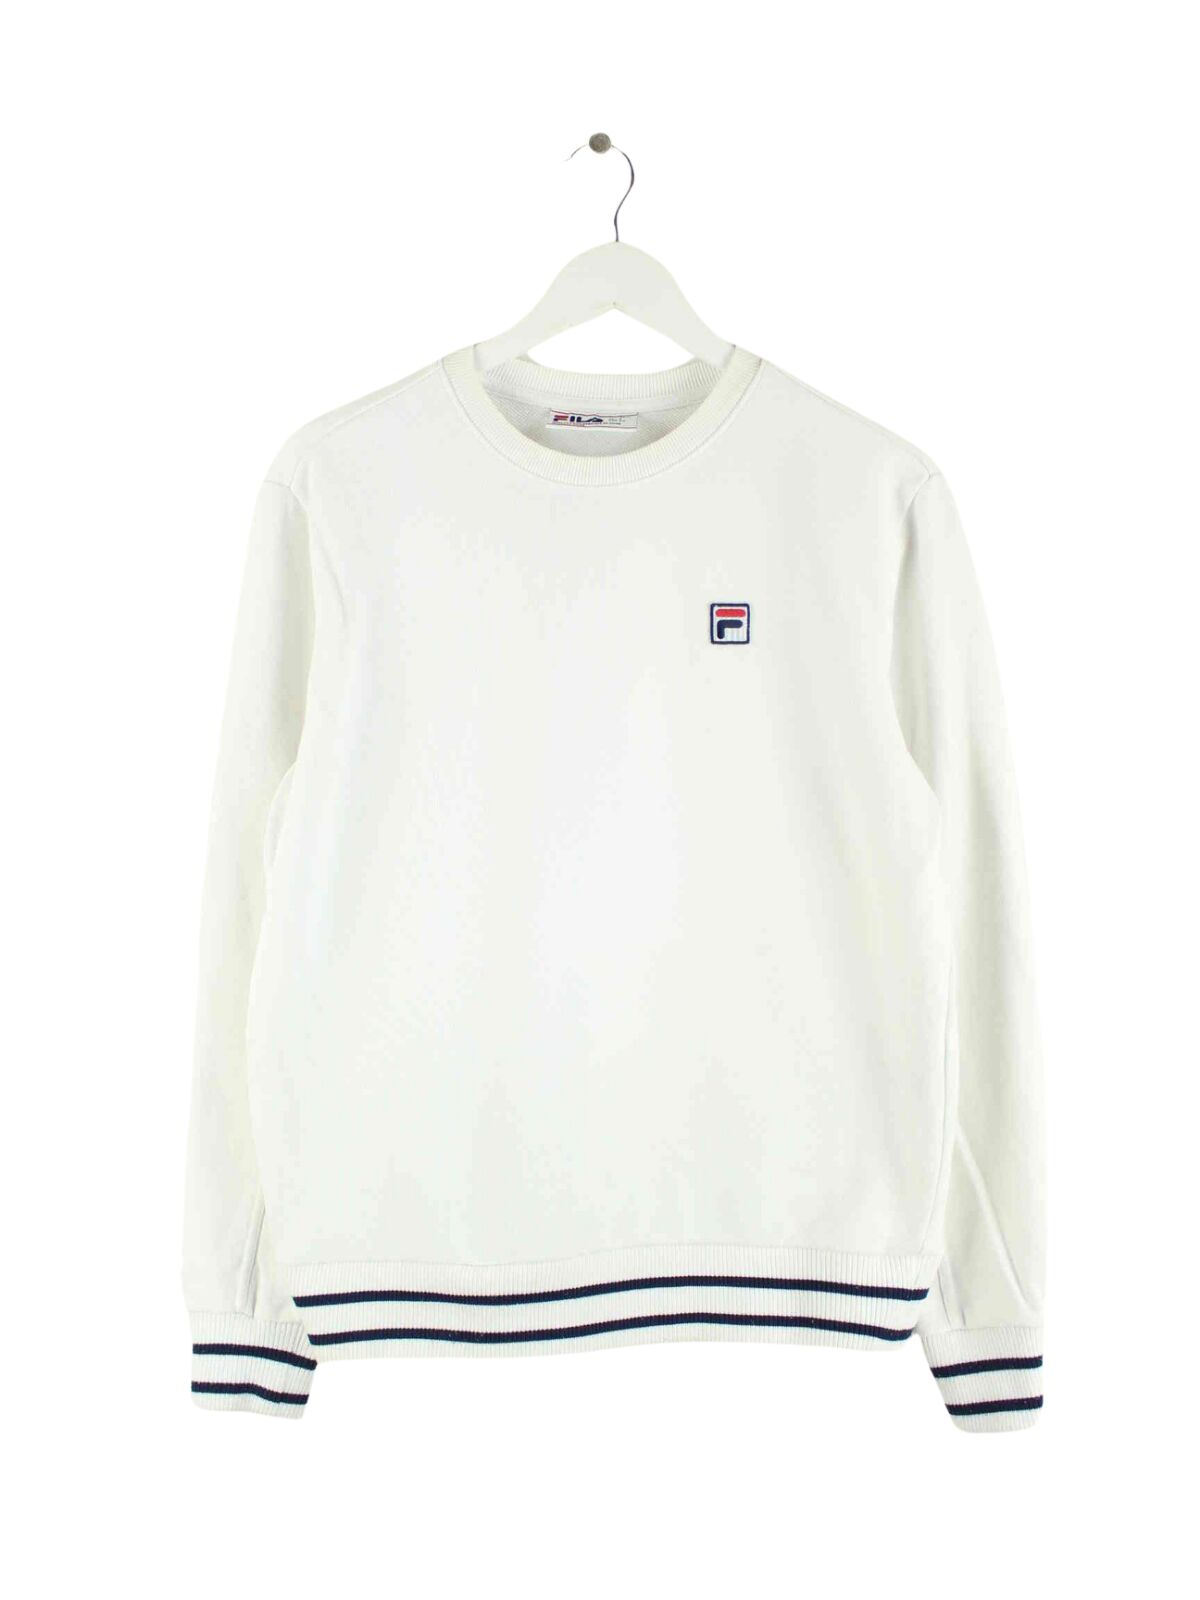 Fila Damen y2k Basic Sweater Weiß S (front image)